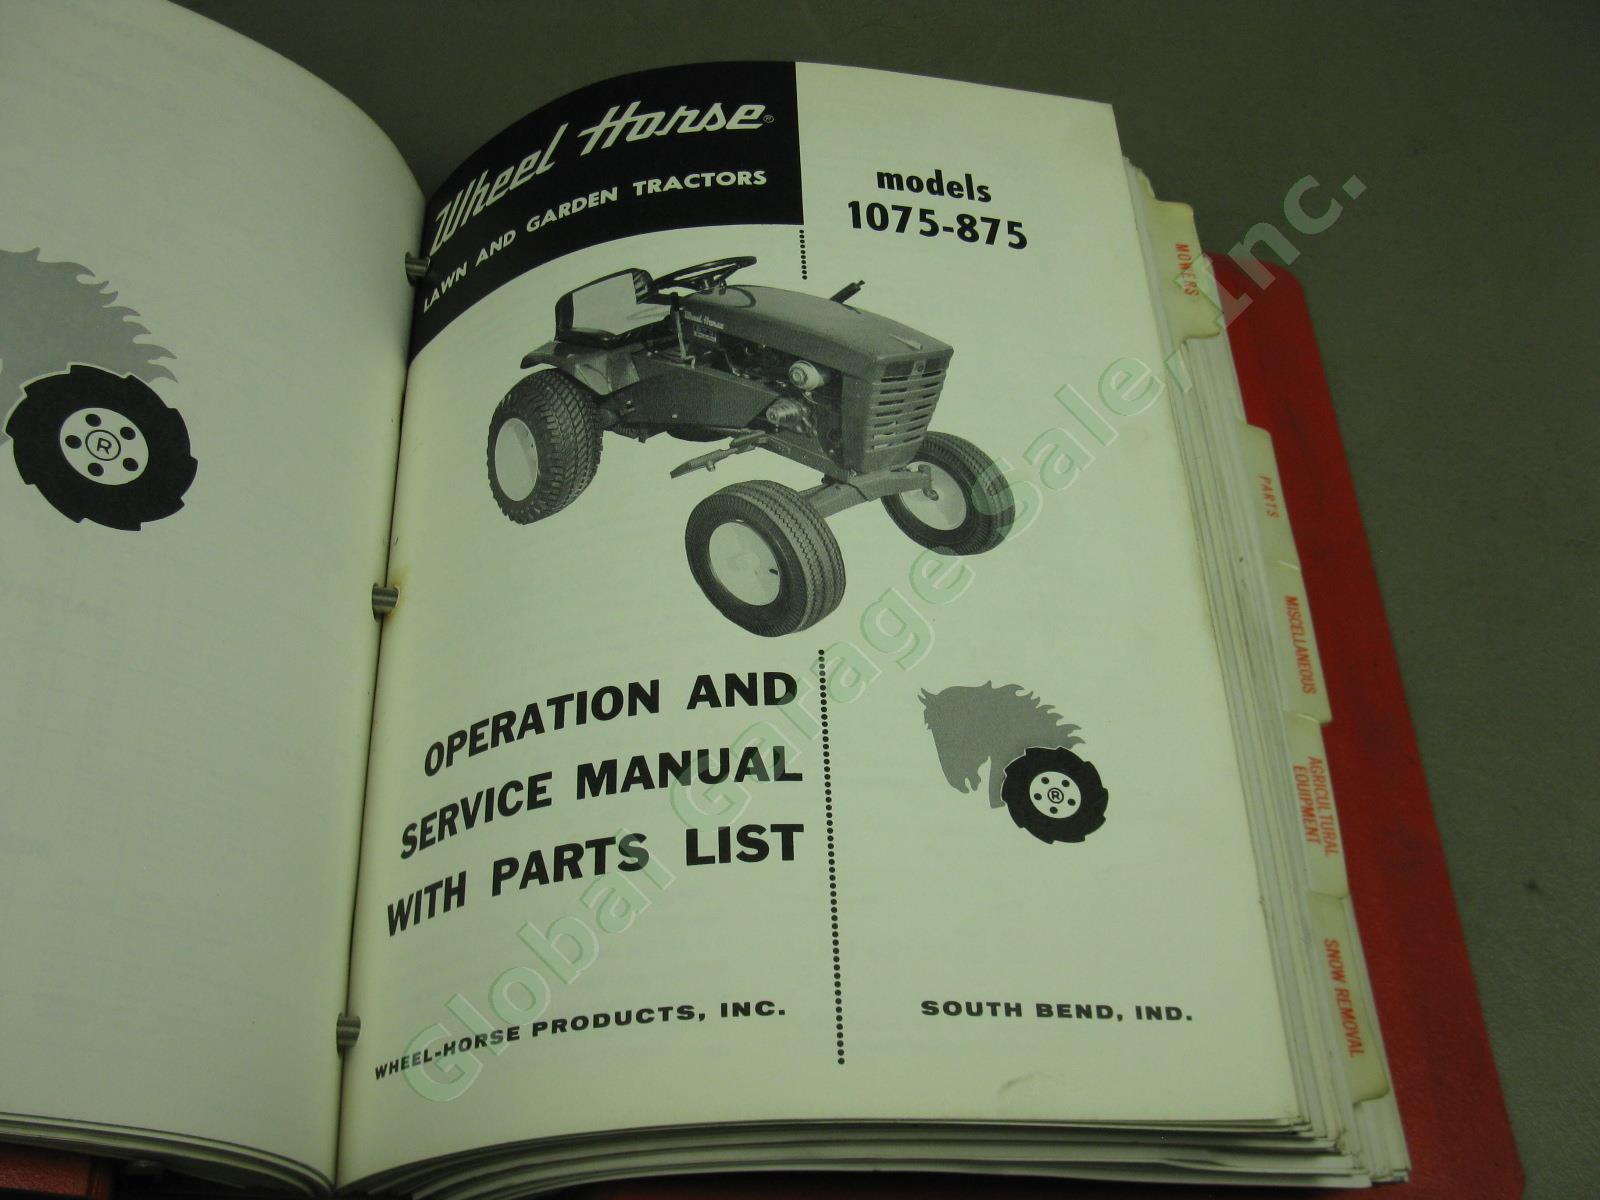 Vtg Wheel Horse Maintenance Manual Part List Lot Tractor Riding Mower 12